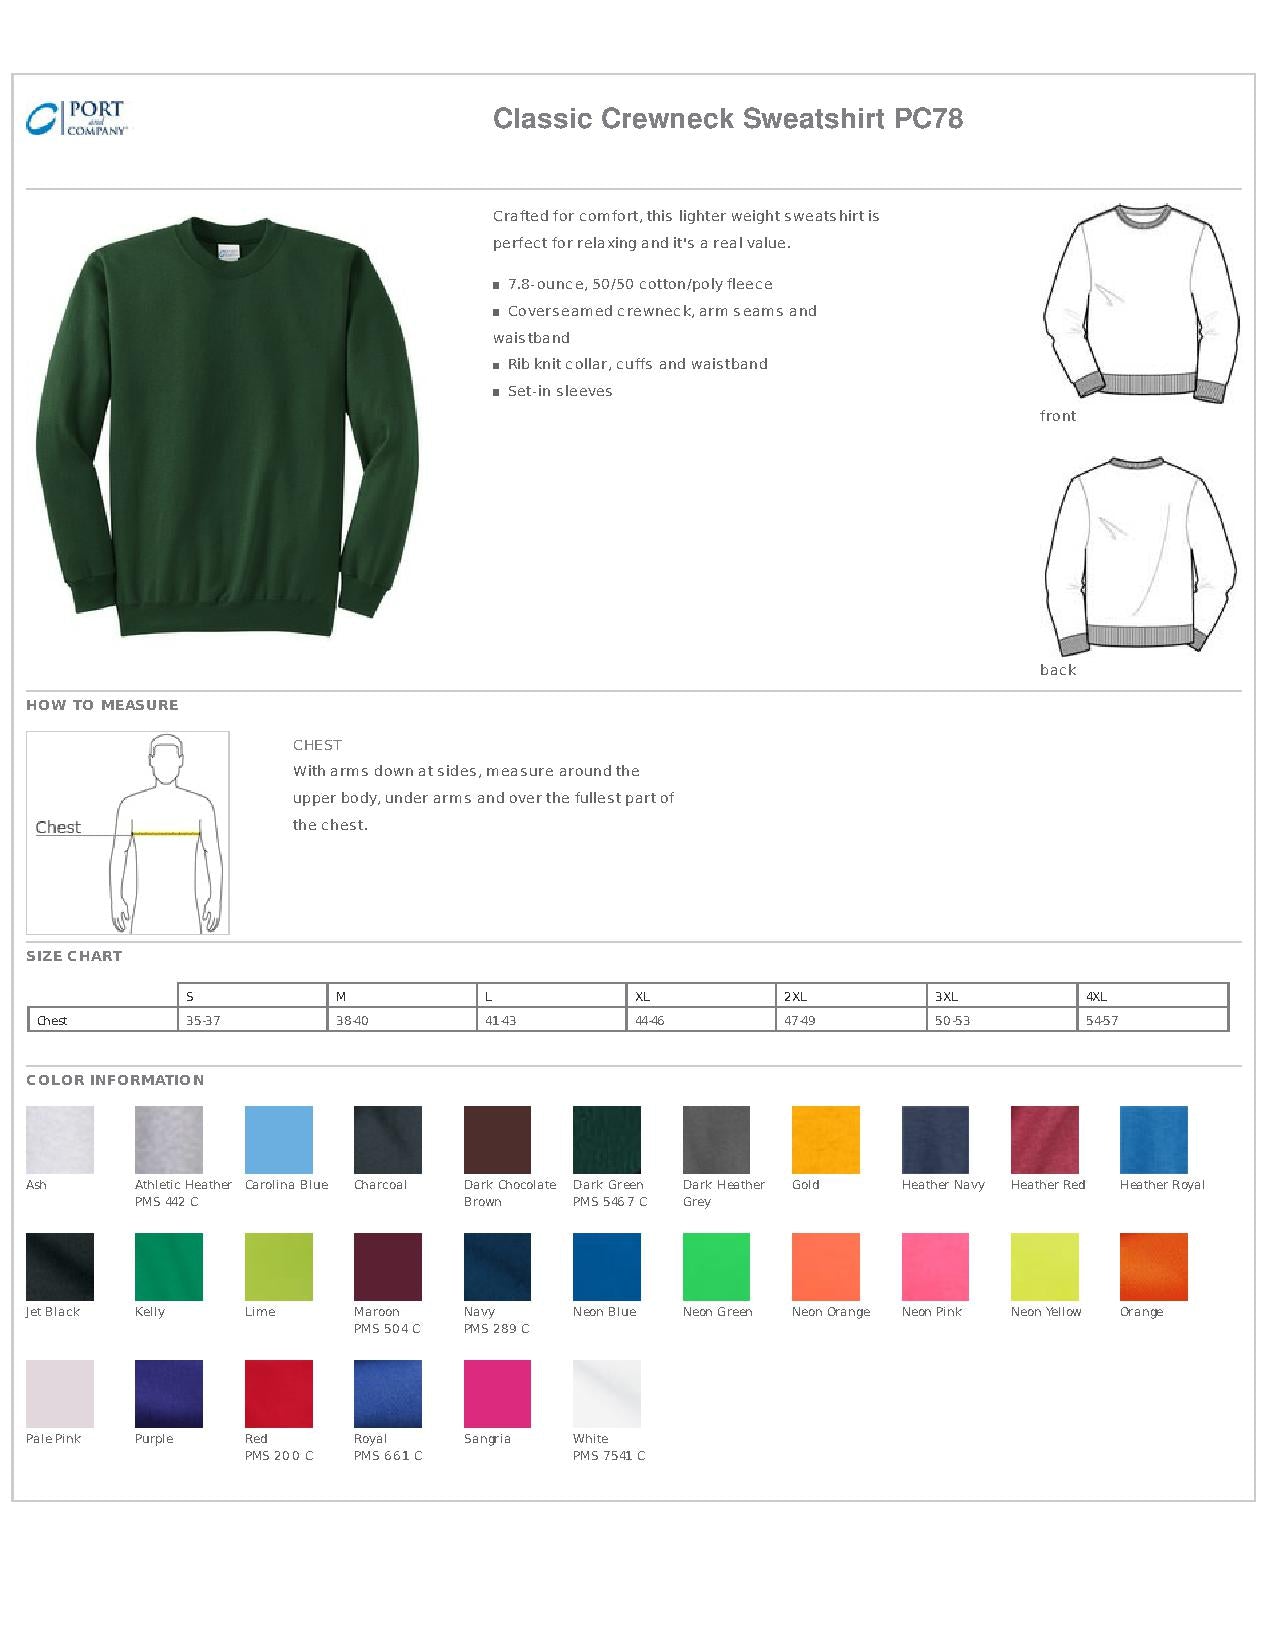 Size chart for pc78 sweatshirts